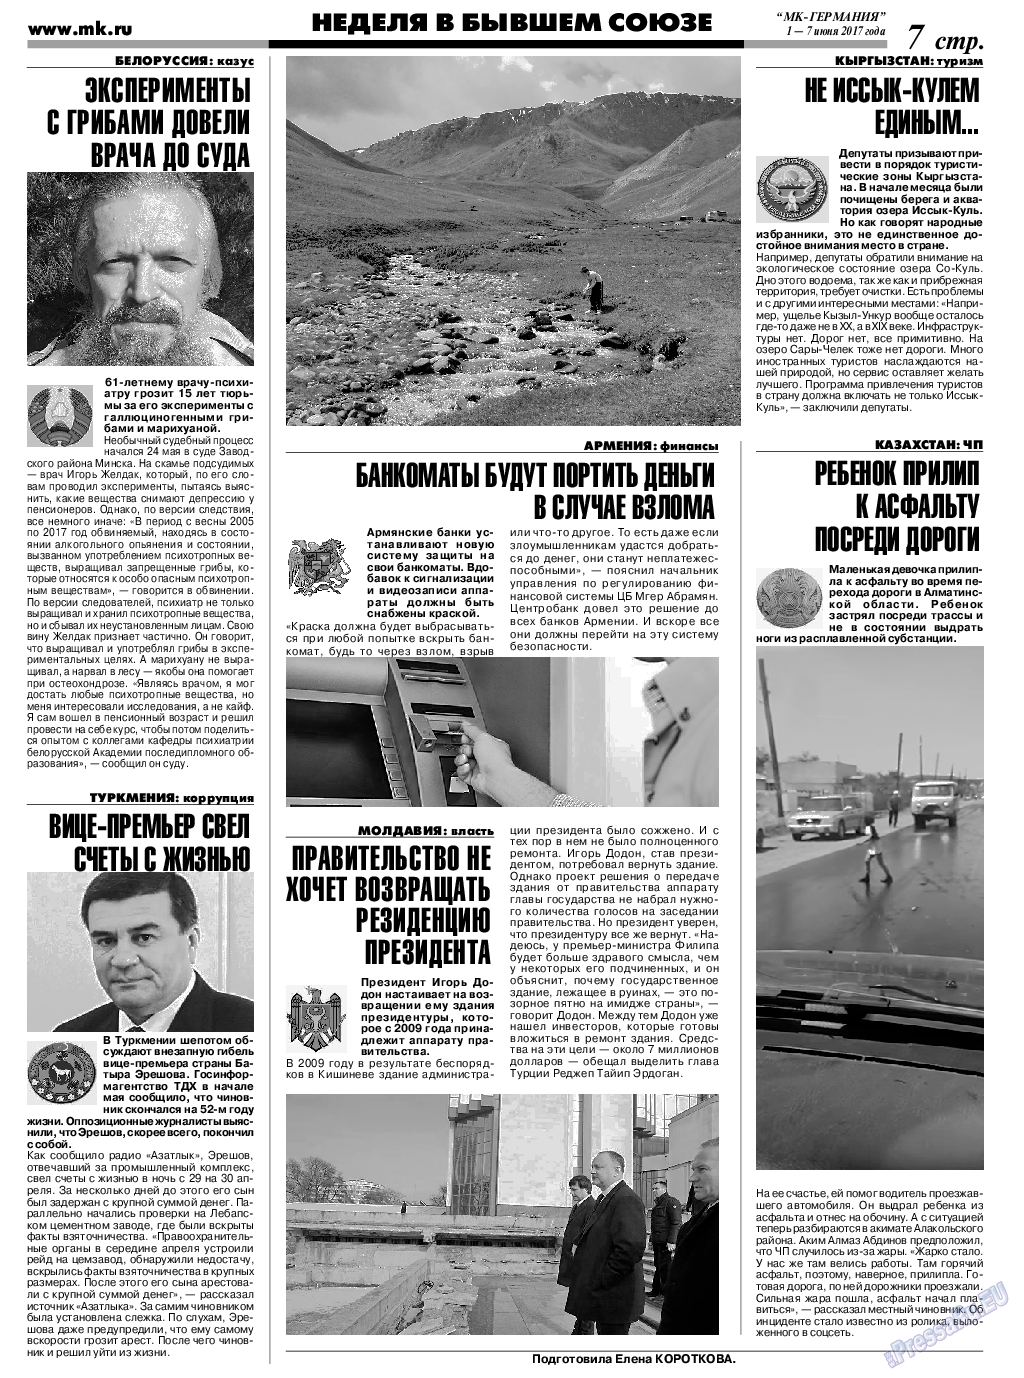 МК-Германия, газета. 2017 №23 стр.7